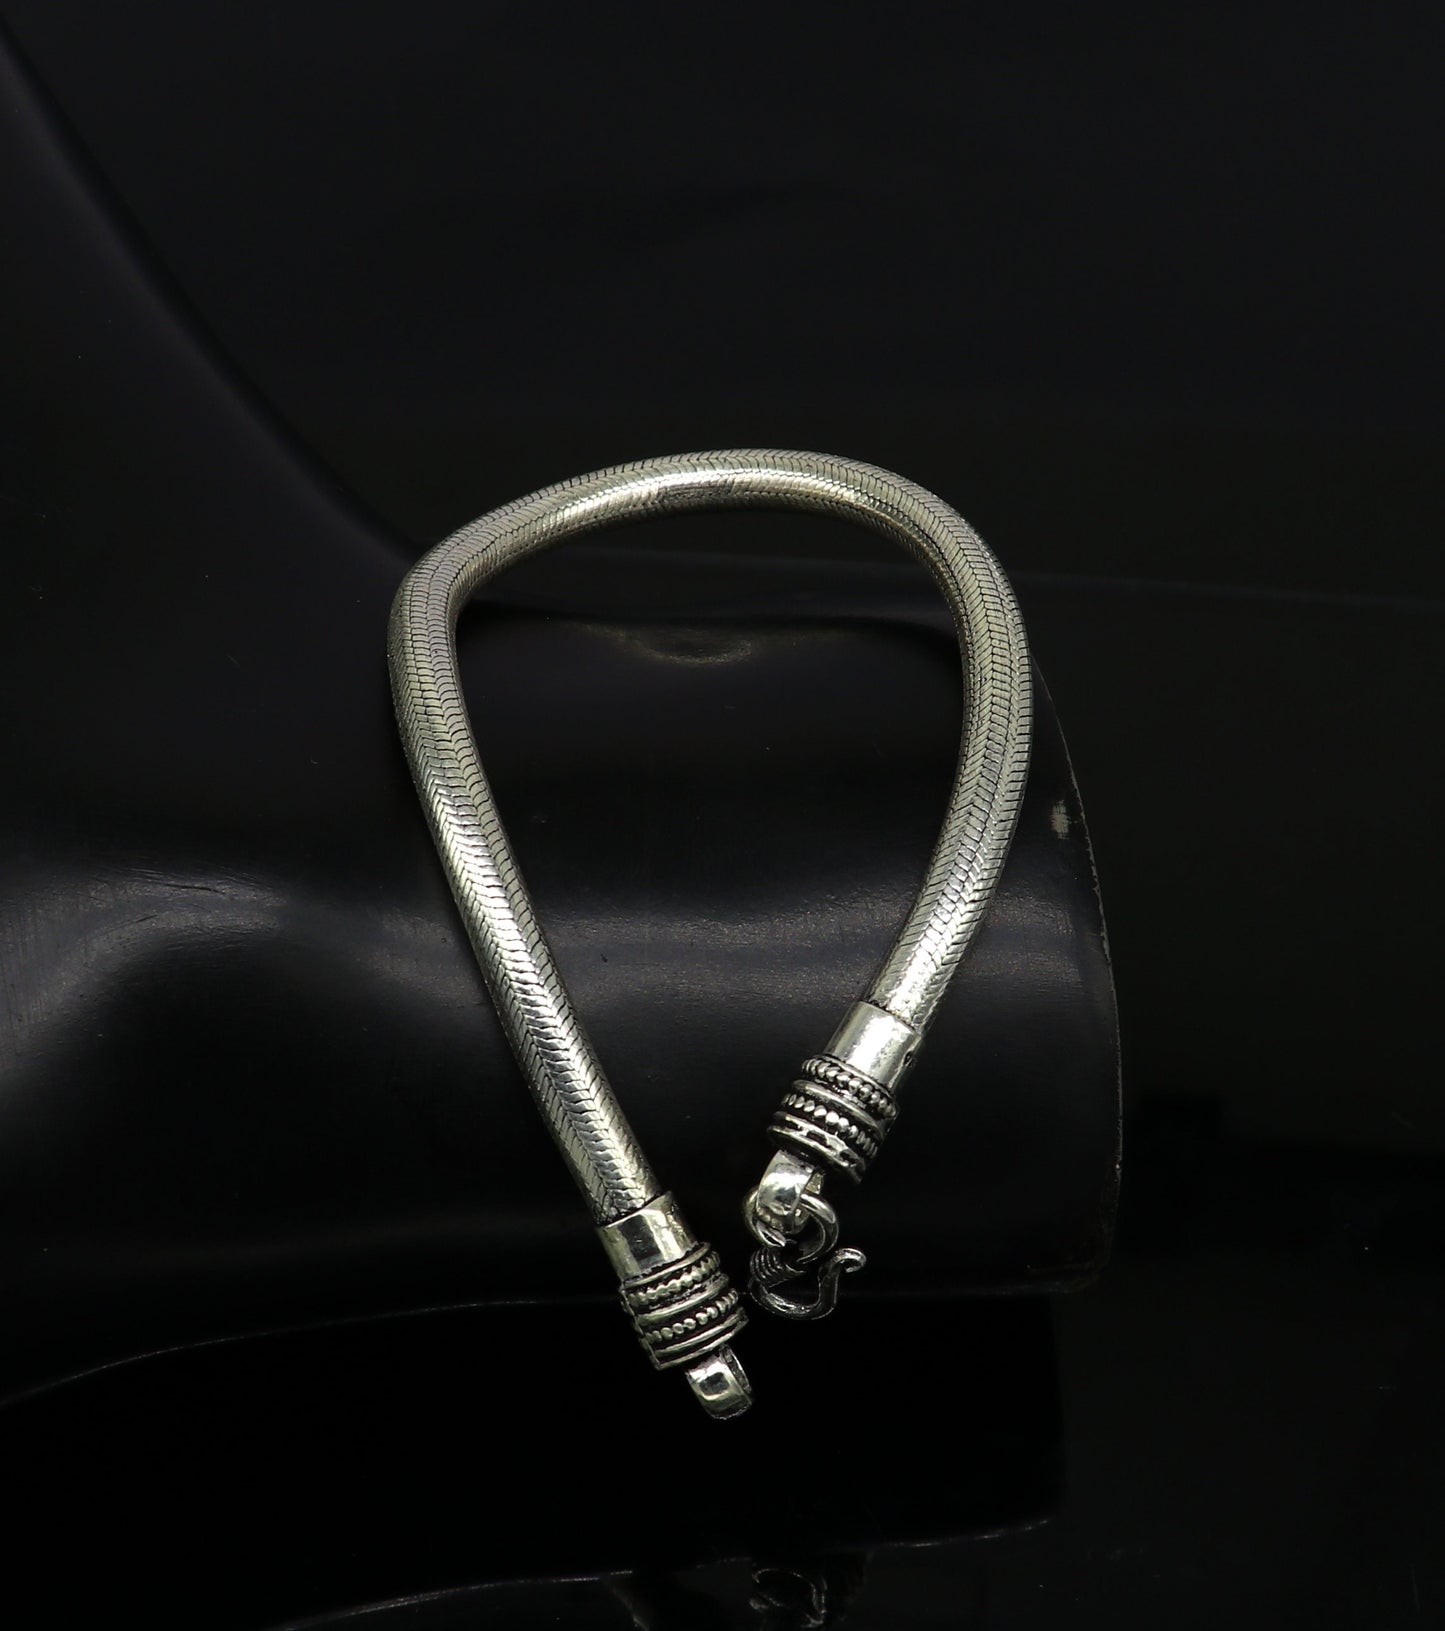 5mm 925 sterling silver best gifting 9" long handmade snake chain bracelet, new stylish fancy customized trendy bracelet jewelry nsbr217 - TRIBAL ORNAMENTS